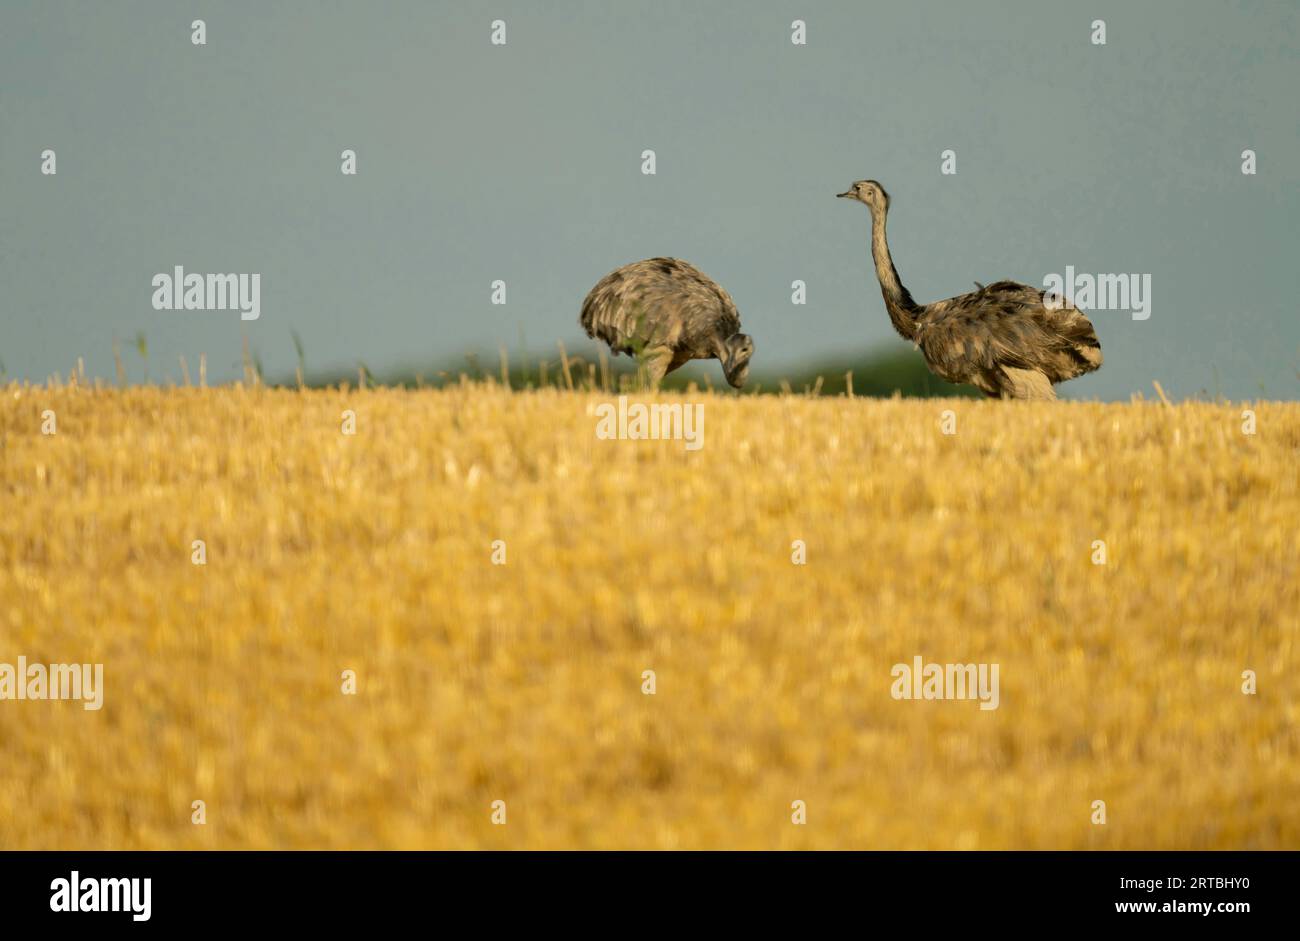 greater rhea (Rhea americana), two greater rheas foraging on a stubble field, Germany Stock Photo